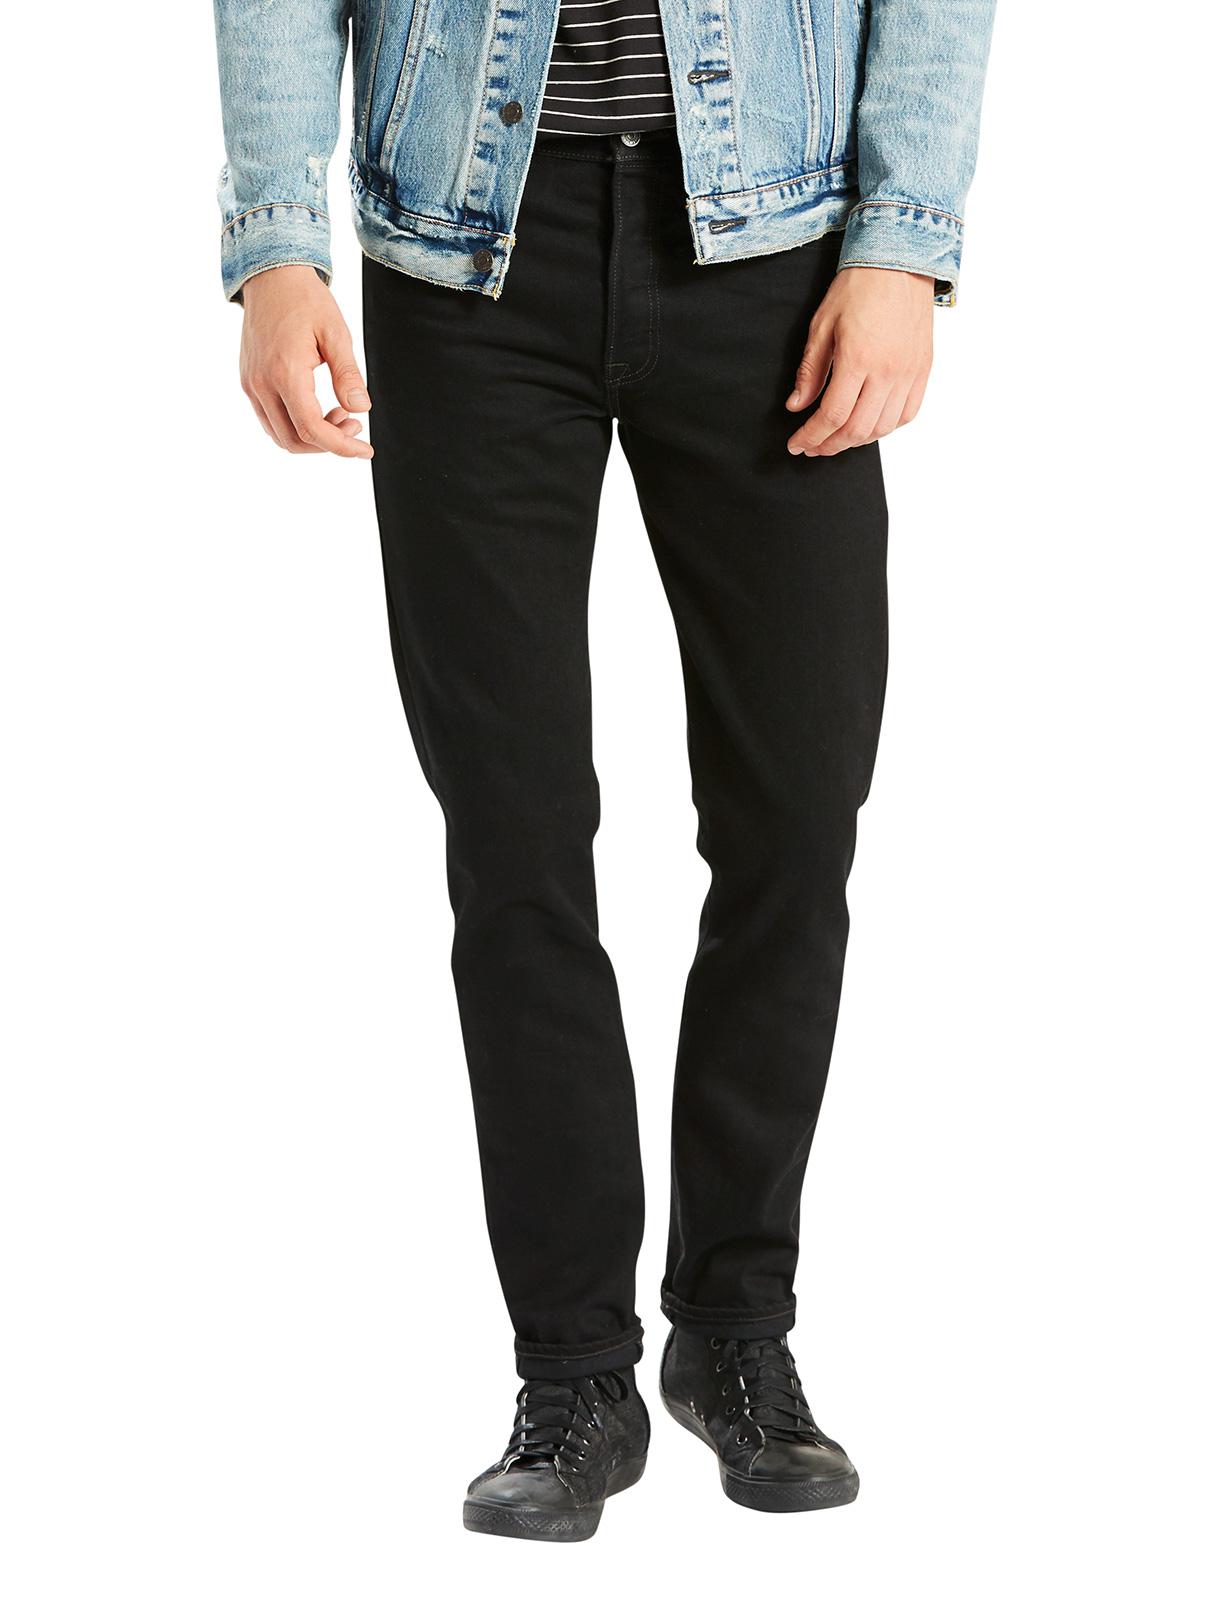 Levi's Dark Denim 501 Skinny Fit Punk Jeans in Black for Men - Lyst